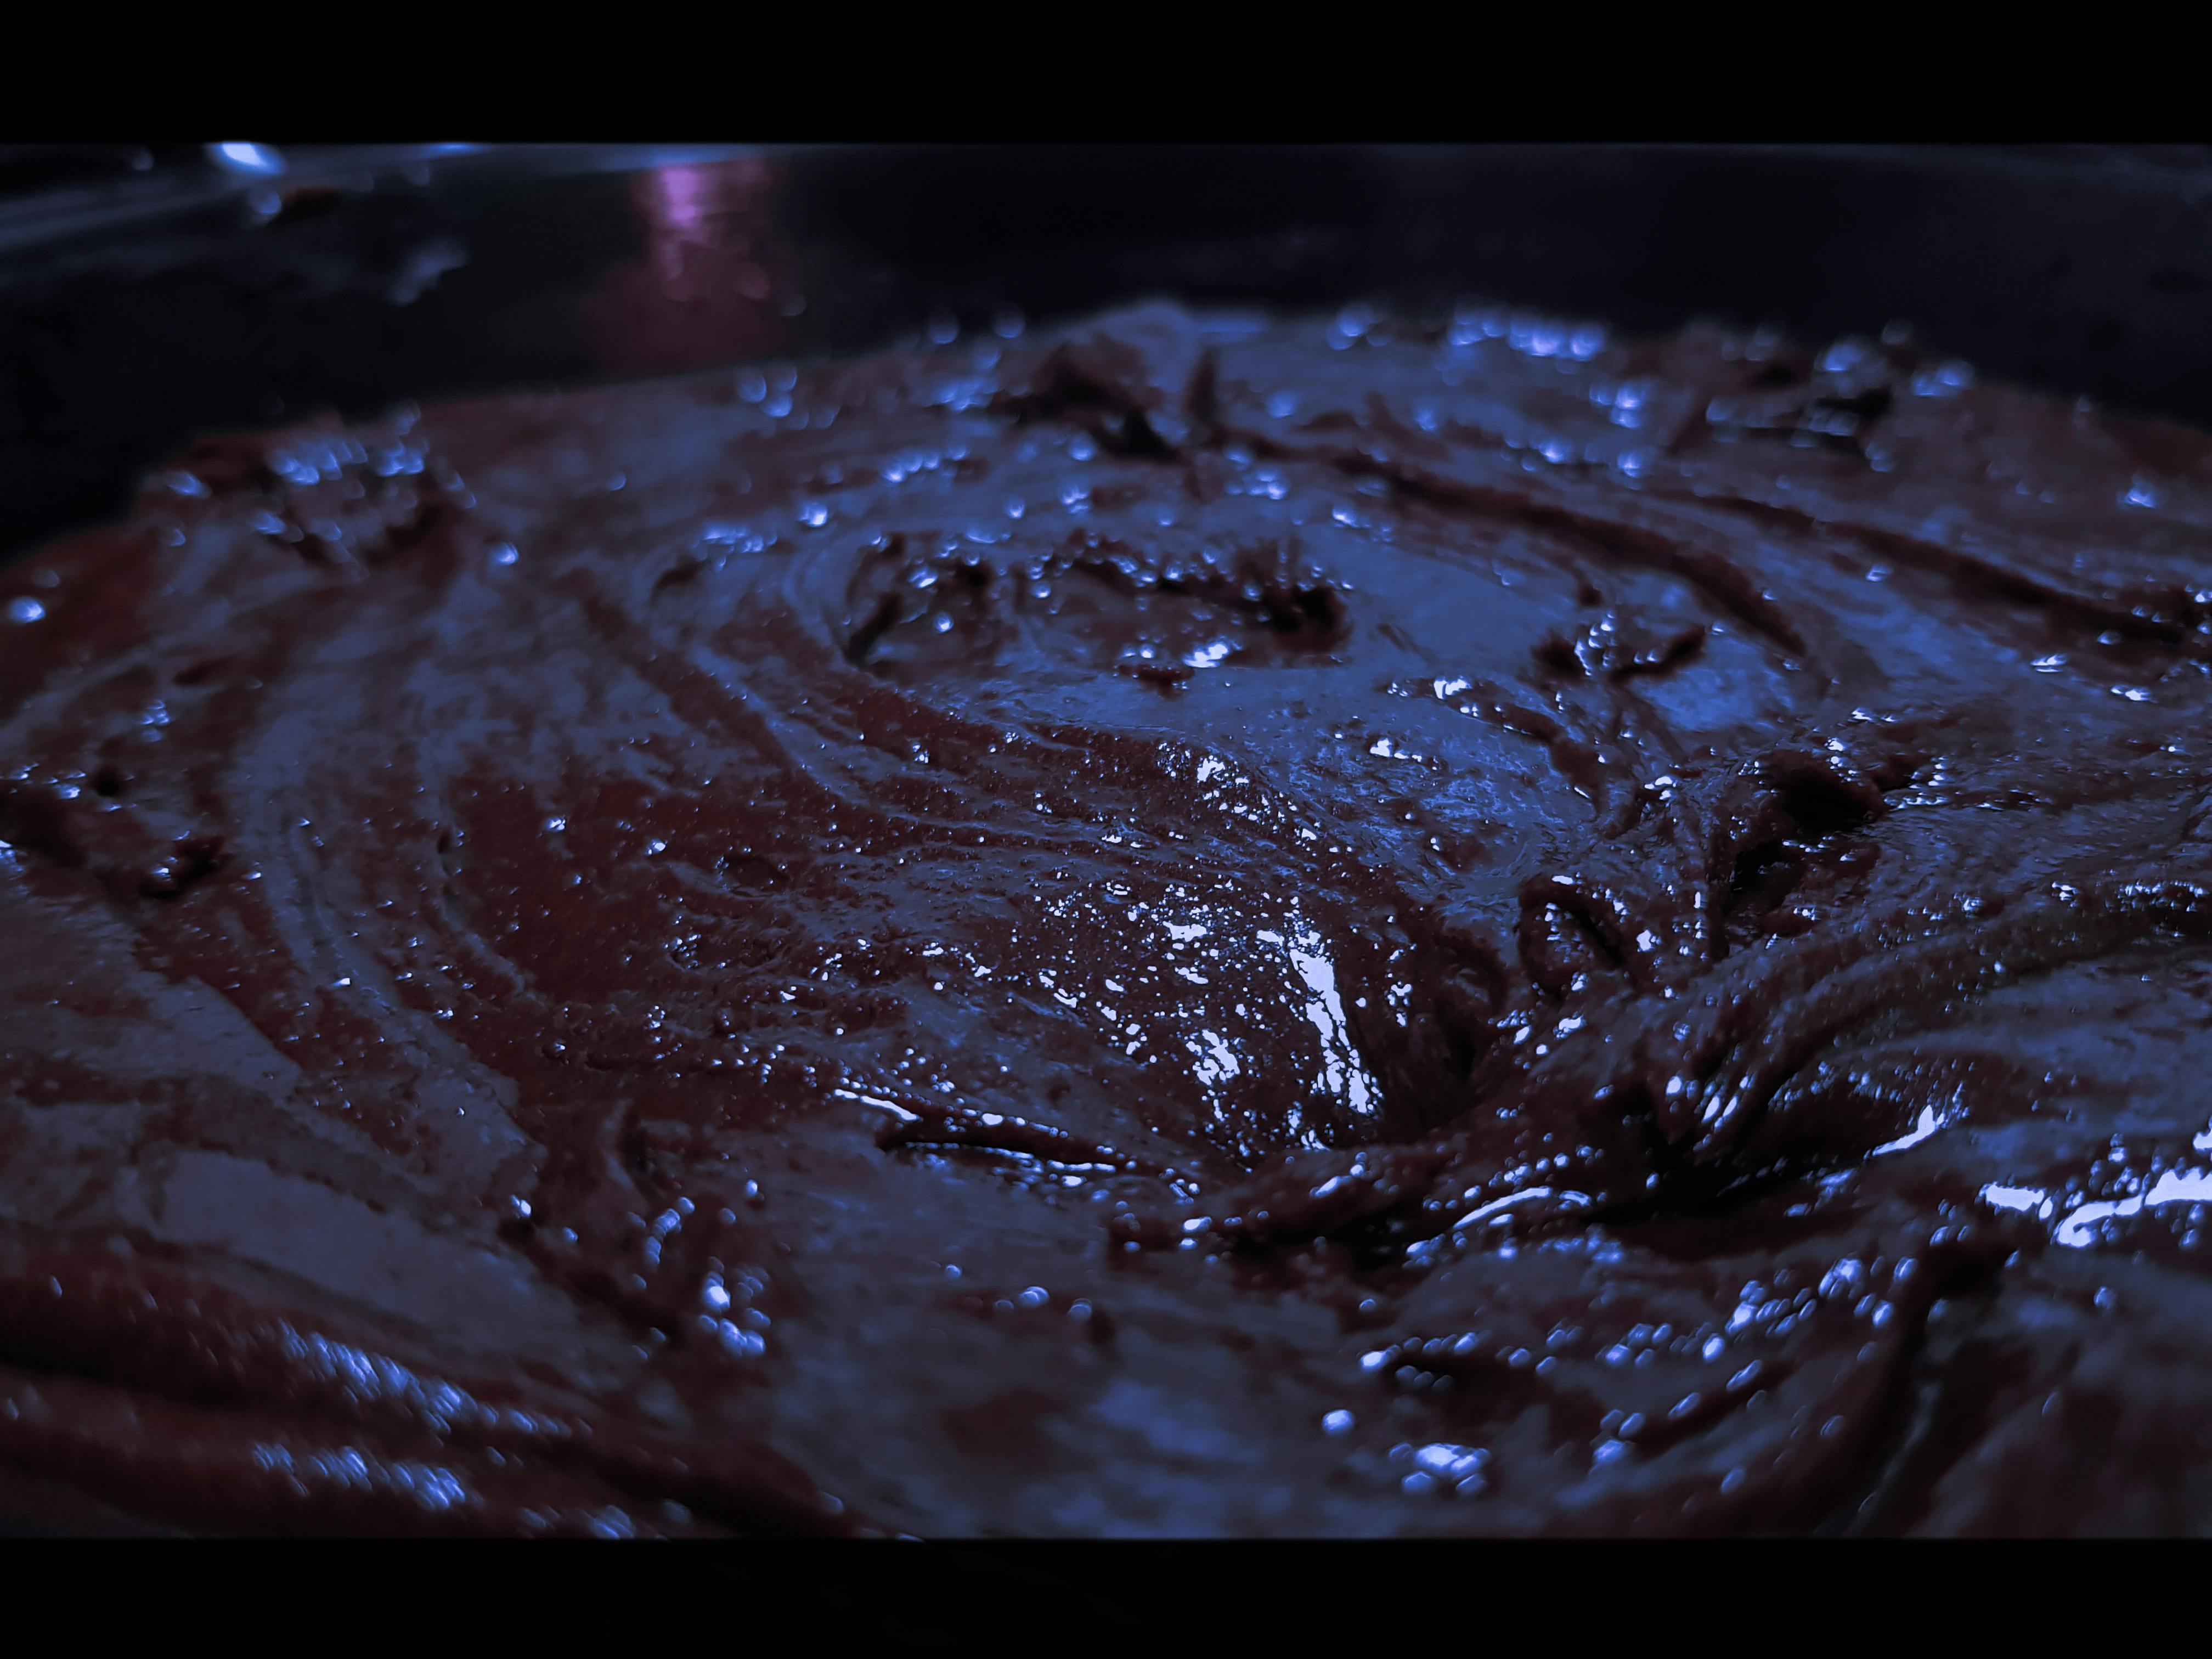 Free stock photo of chocolate, Chocolate Brownie, Chocolate brownie mix choclate browni